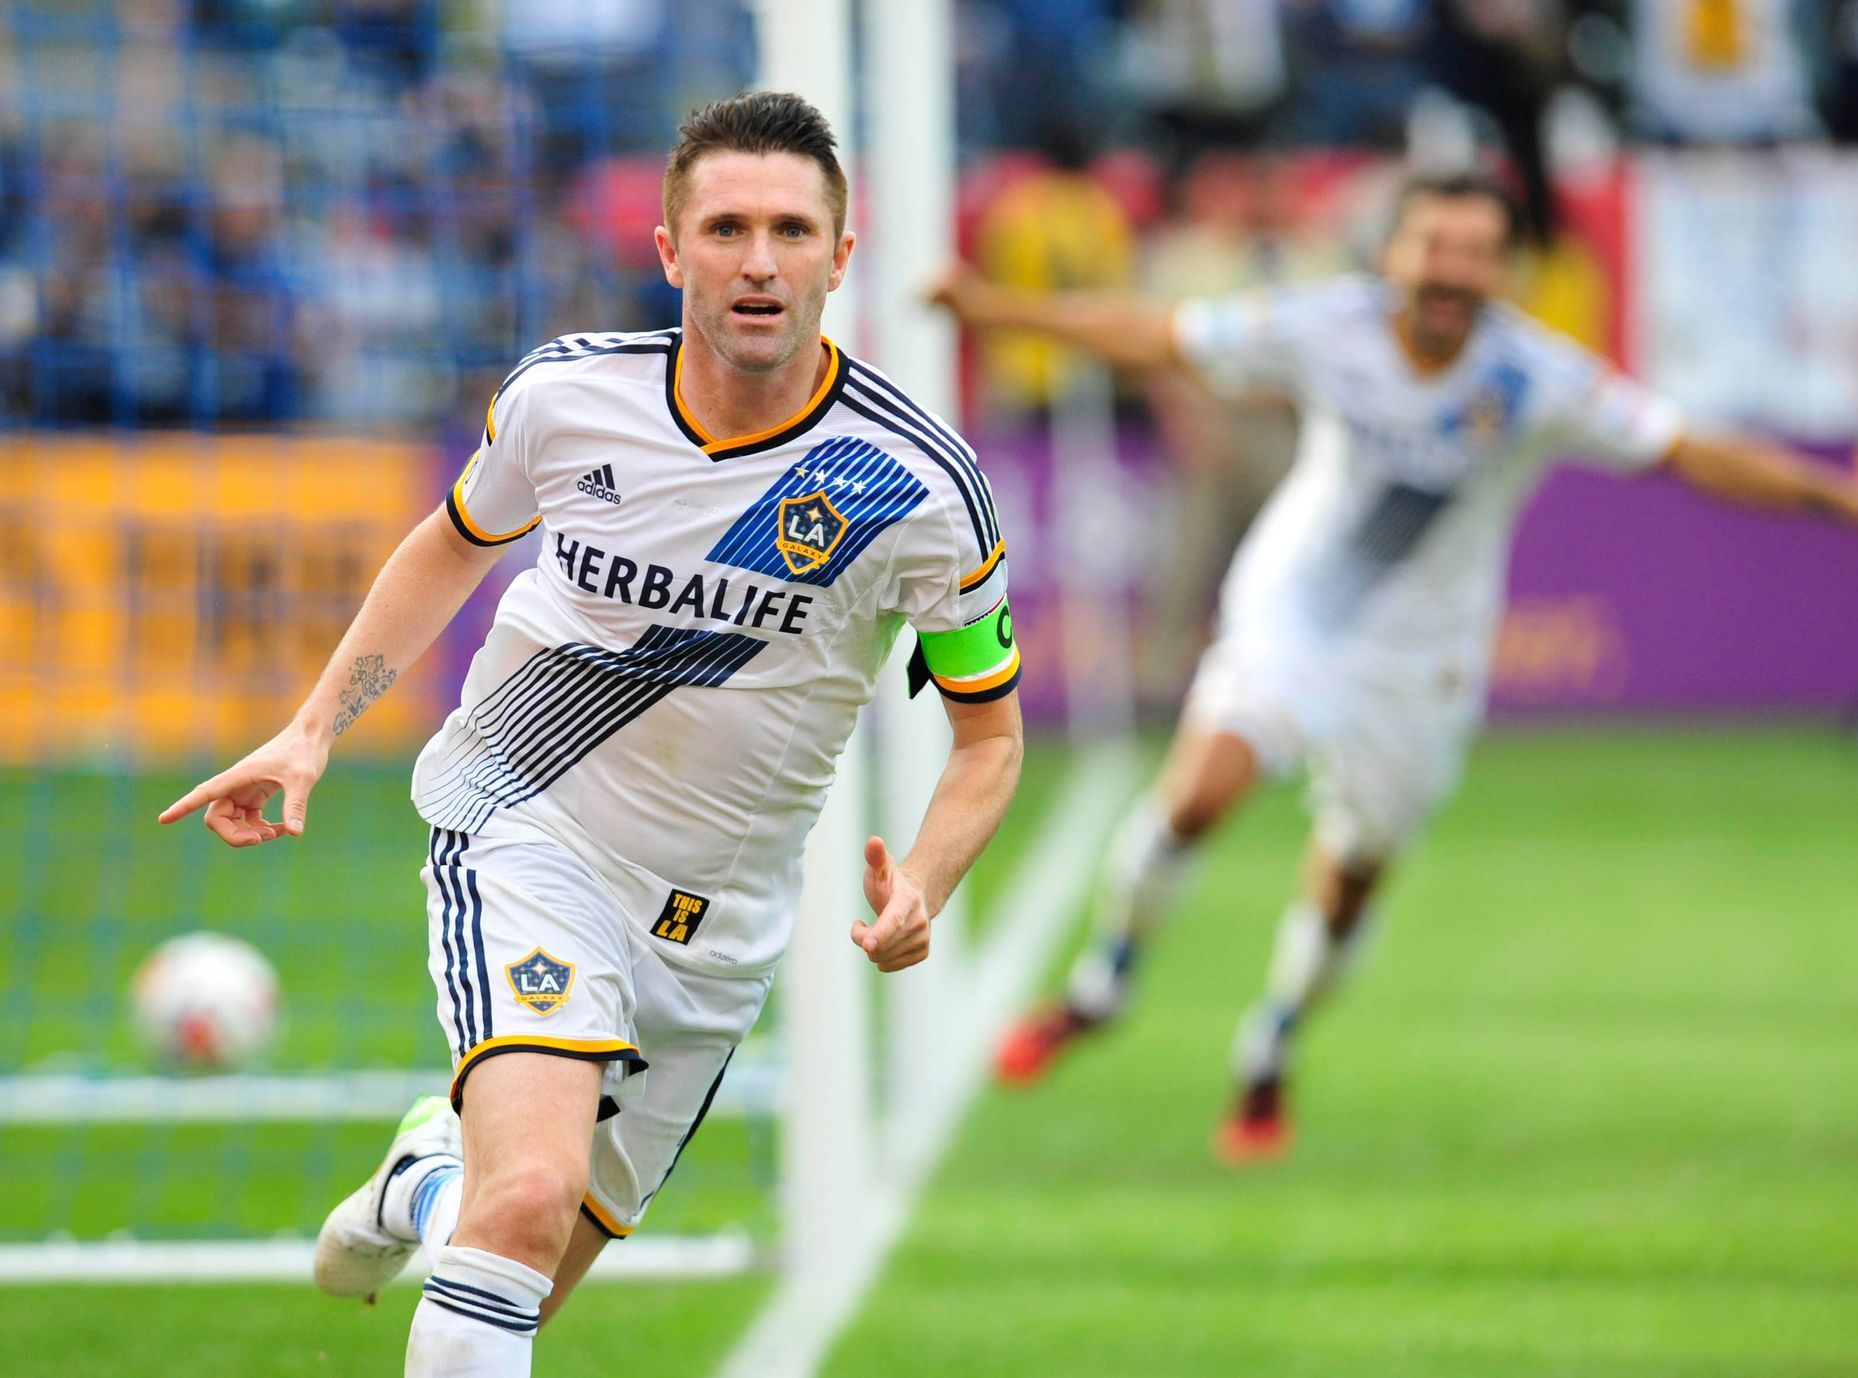 MLS: MLS Cup Final-New England Revolution vs LA Galaxy (Robbie Keane)